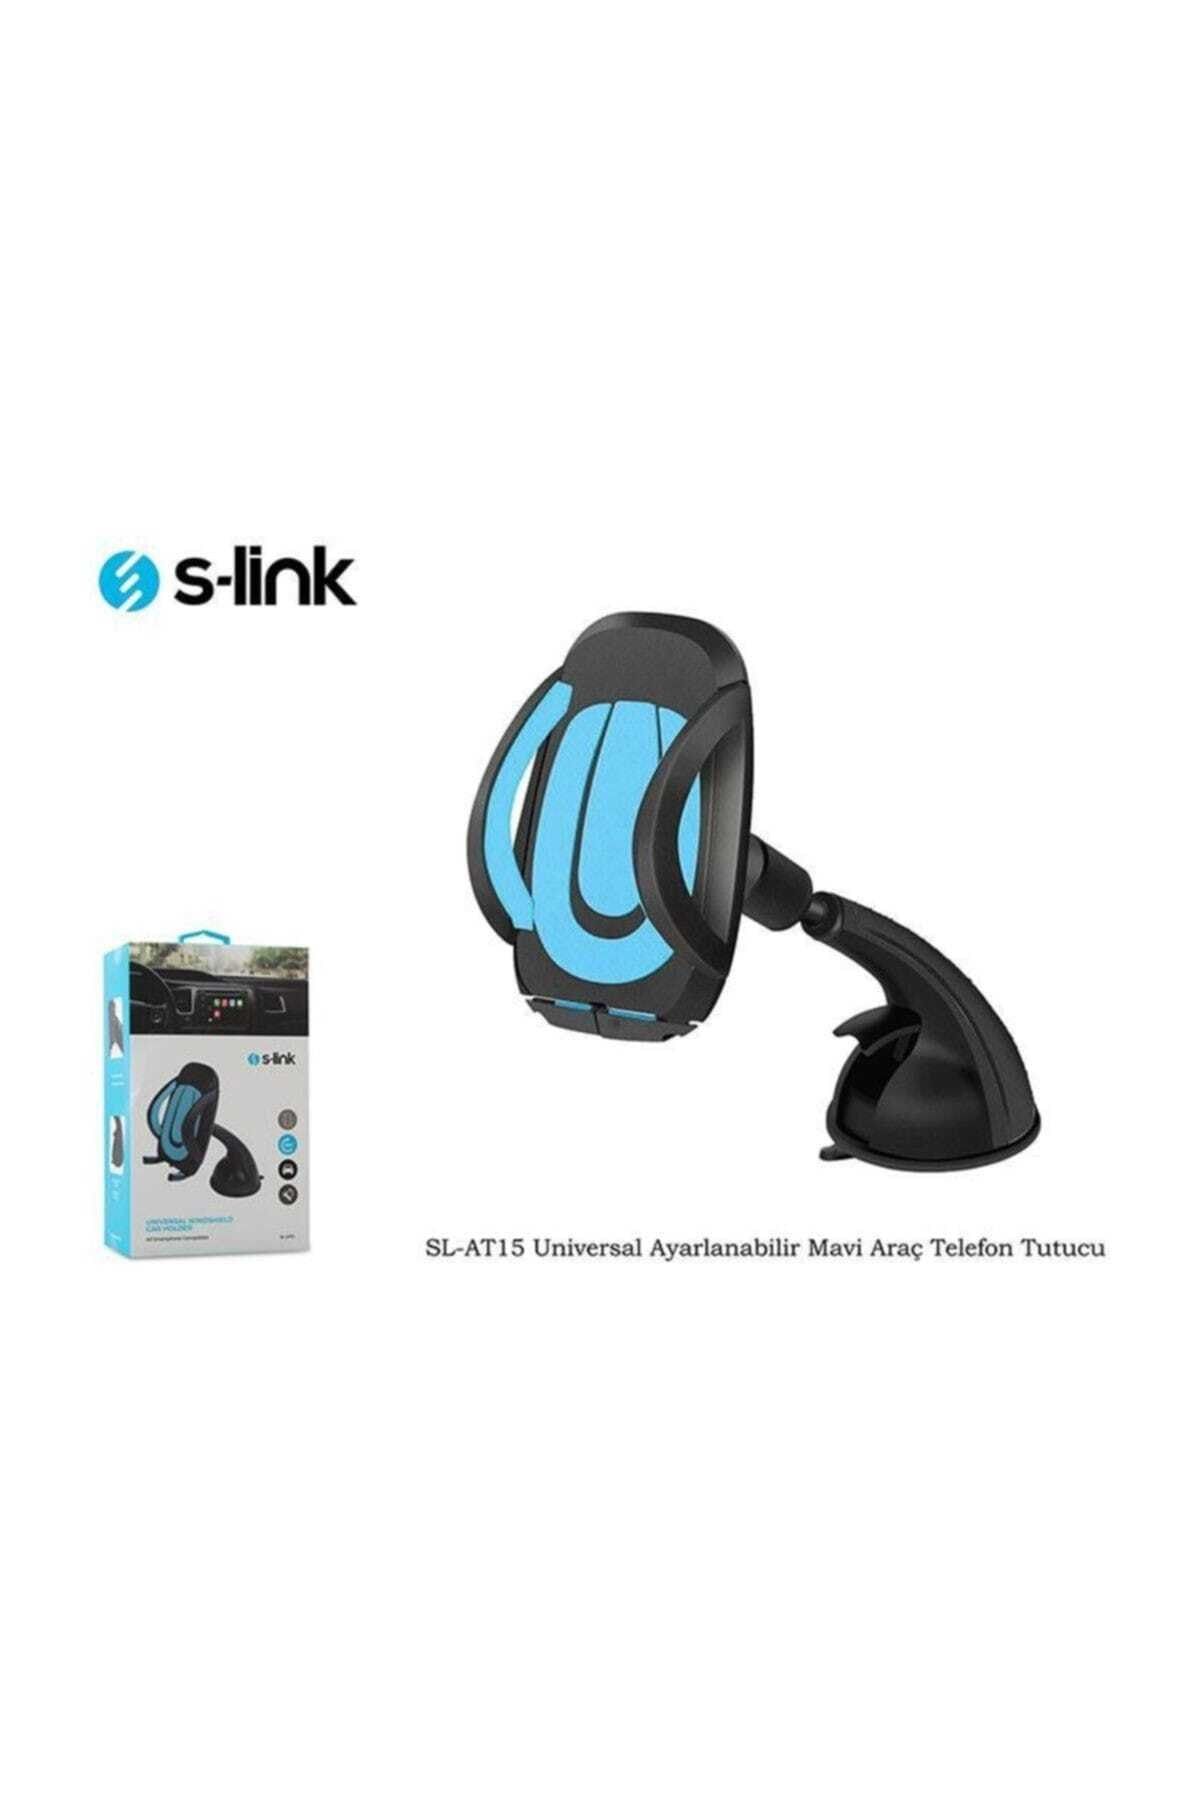 S-Link SL-AT15 Universal Ayarlanabilir Mavi Araç Telefon Tutucu